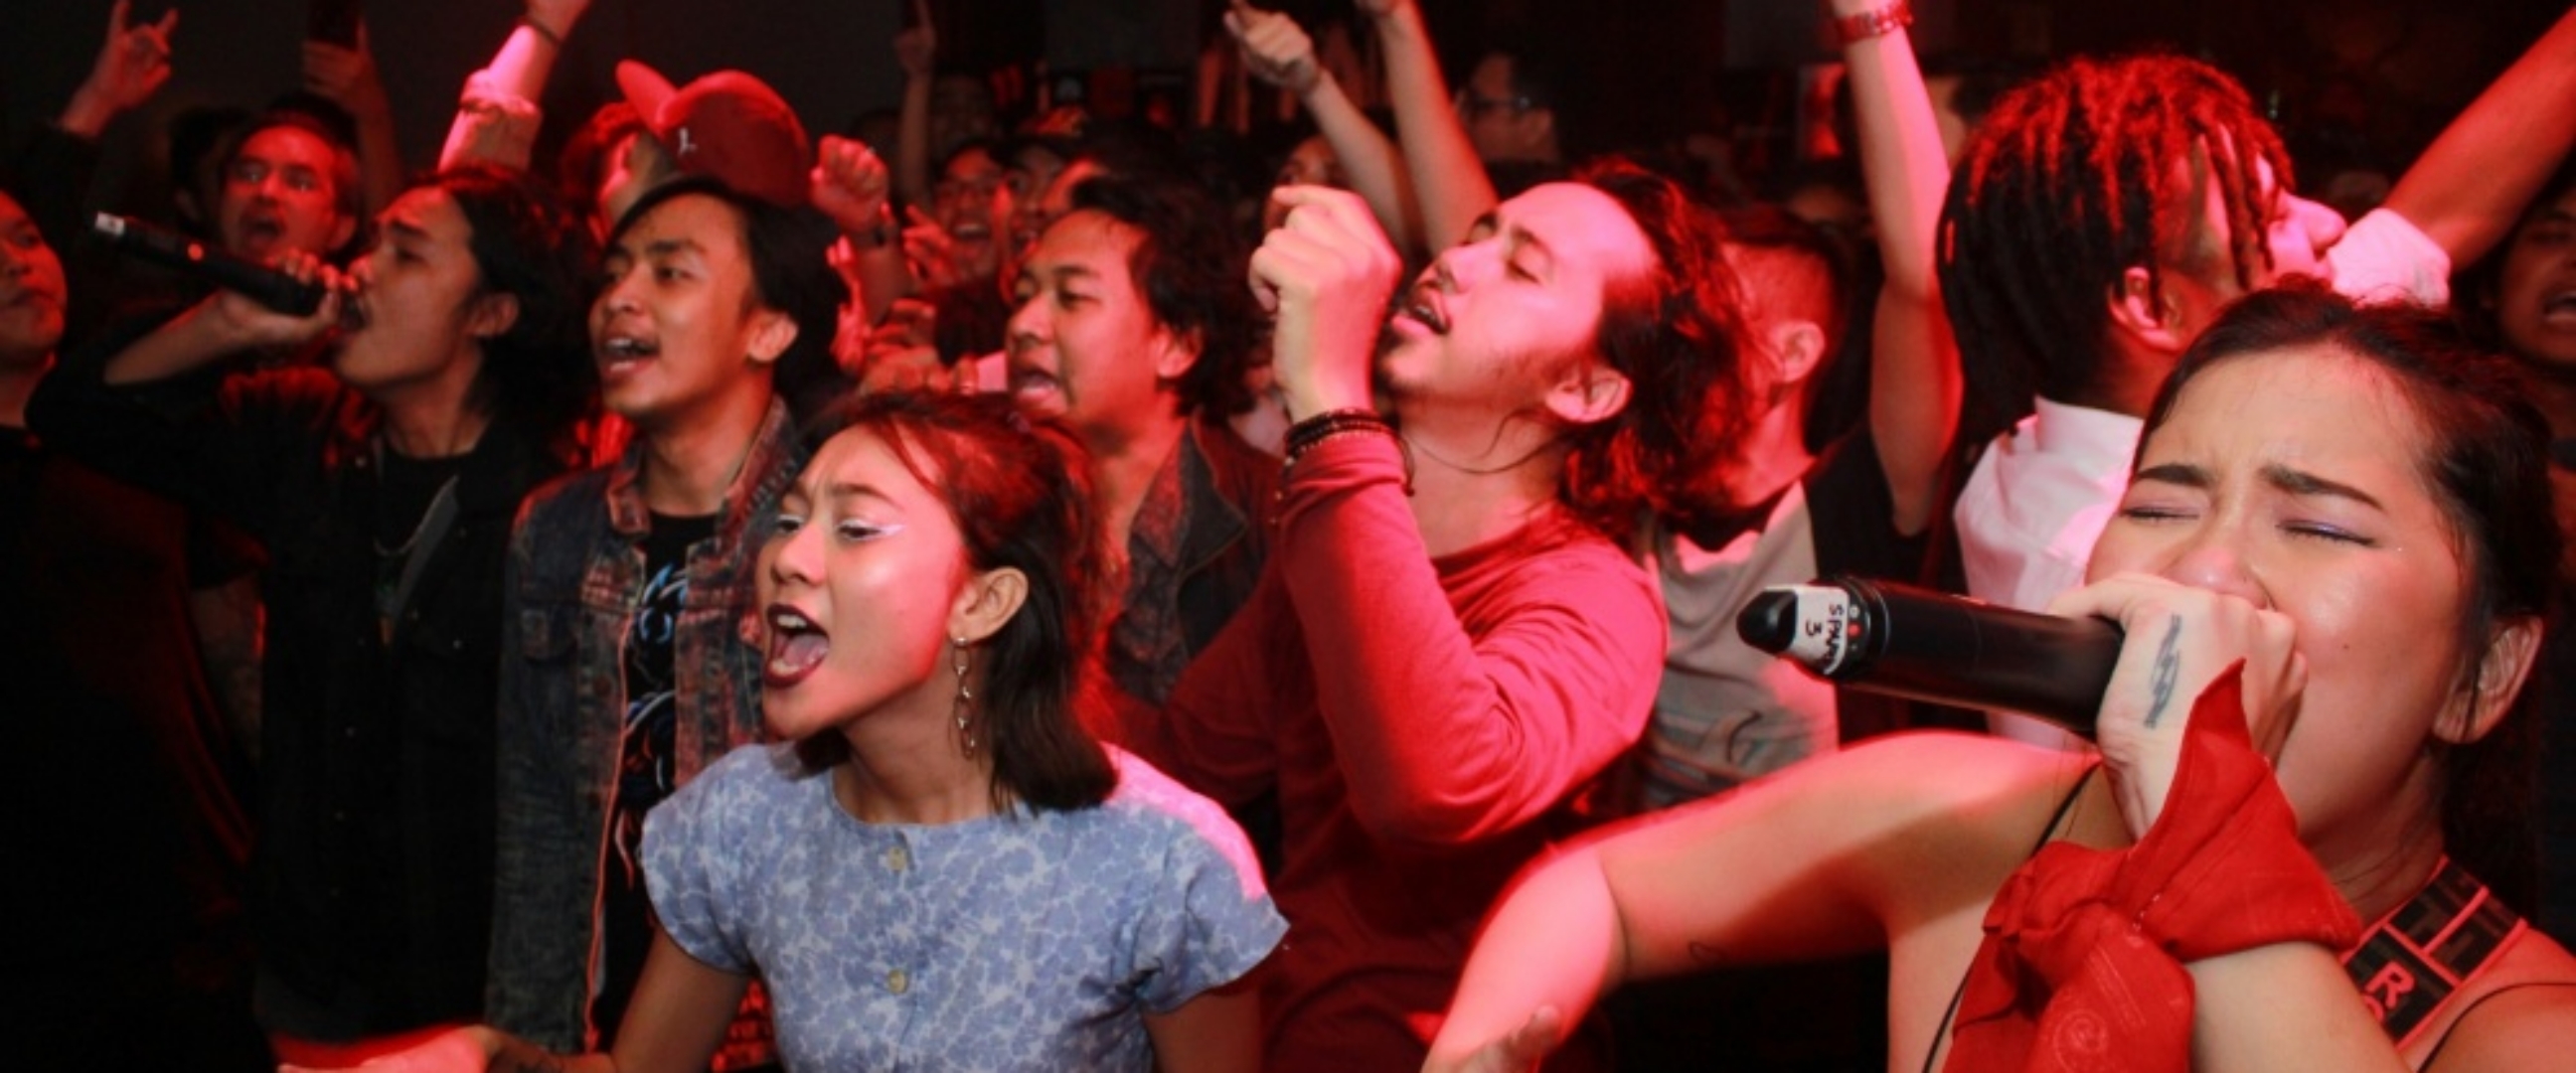 Angkat kultur karaoke, Supermusic apresiasi kontes adu singing